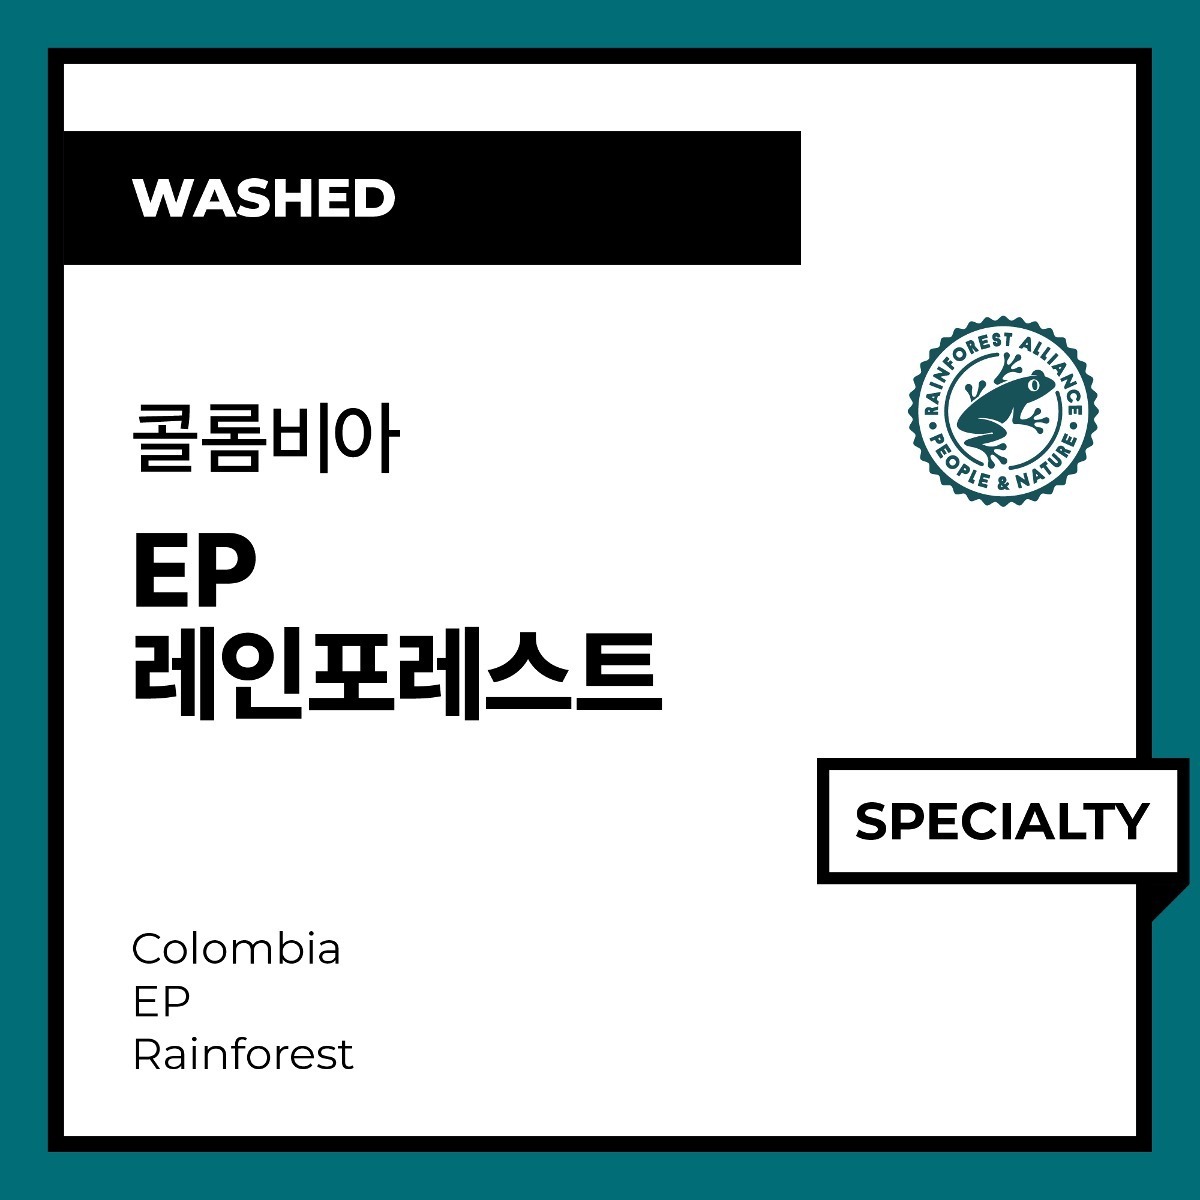 Colombia EP Rainforest (Washed) 콜롬비아 EP 레인포레스트 (워시드)